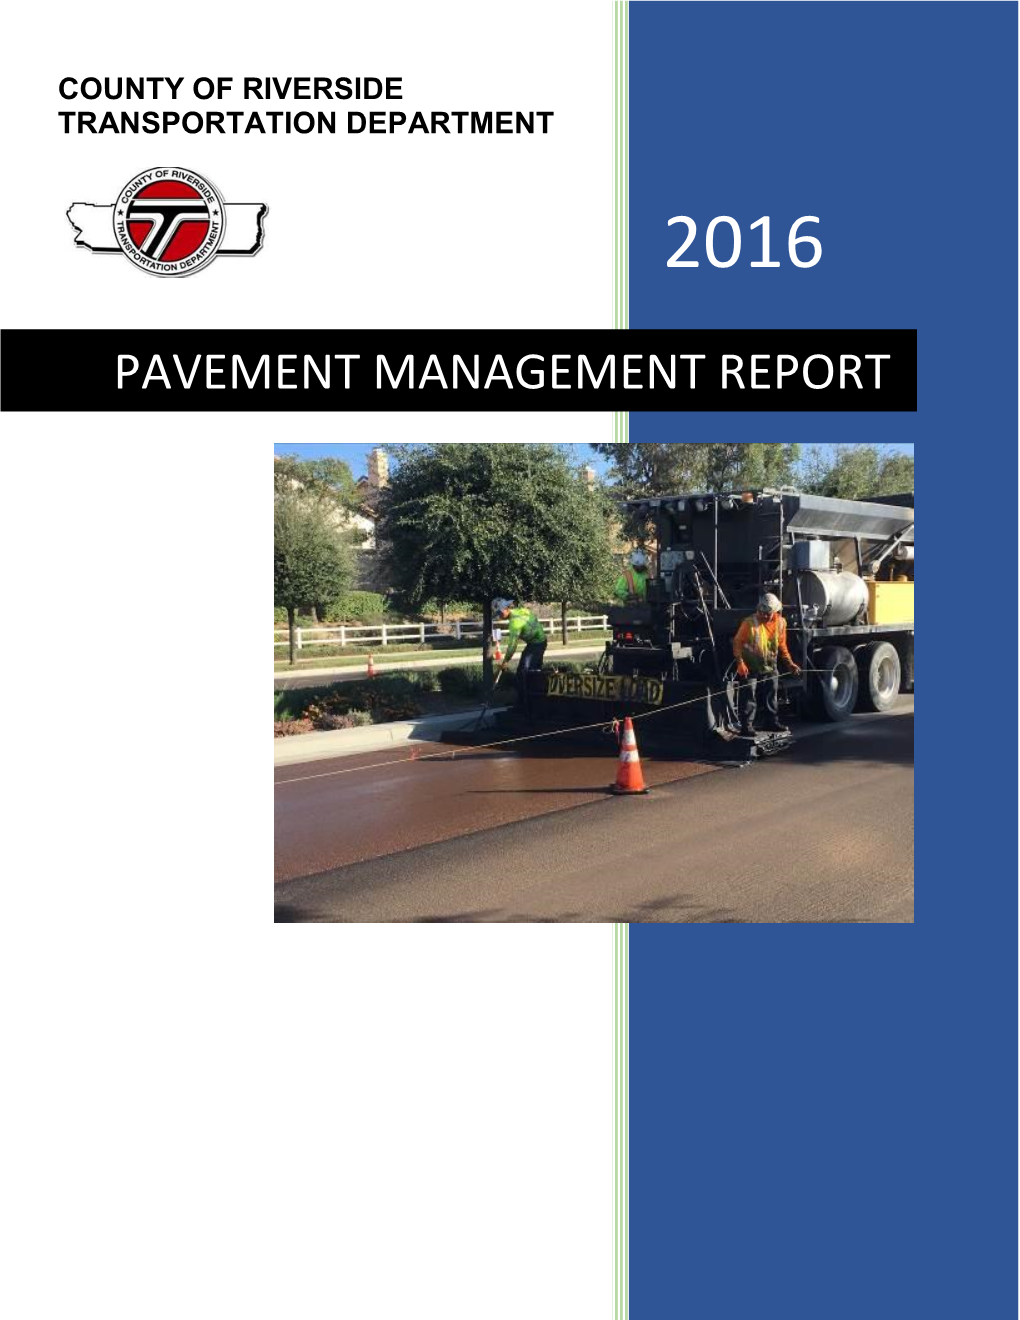 Pavement Management Report 2016